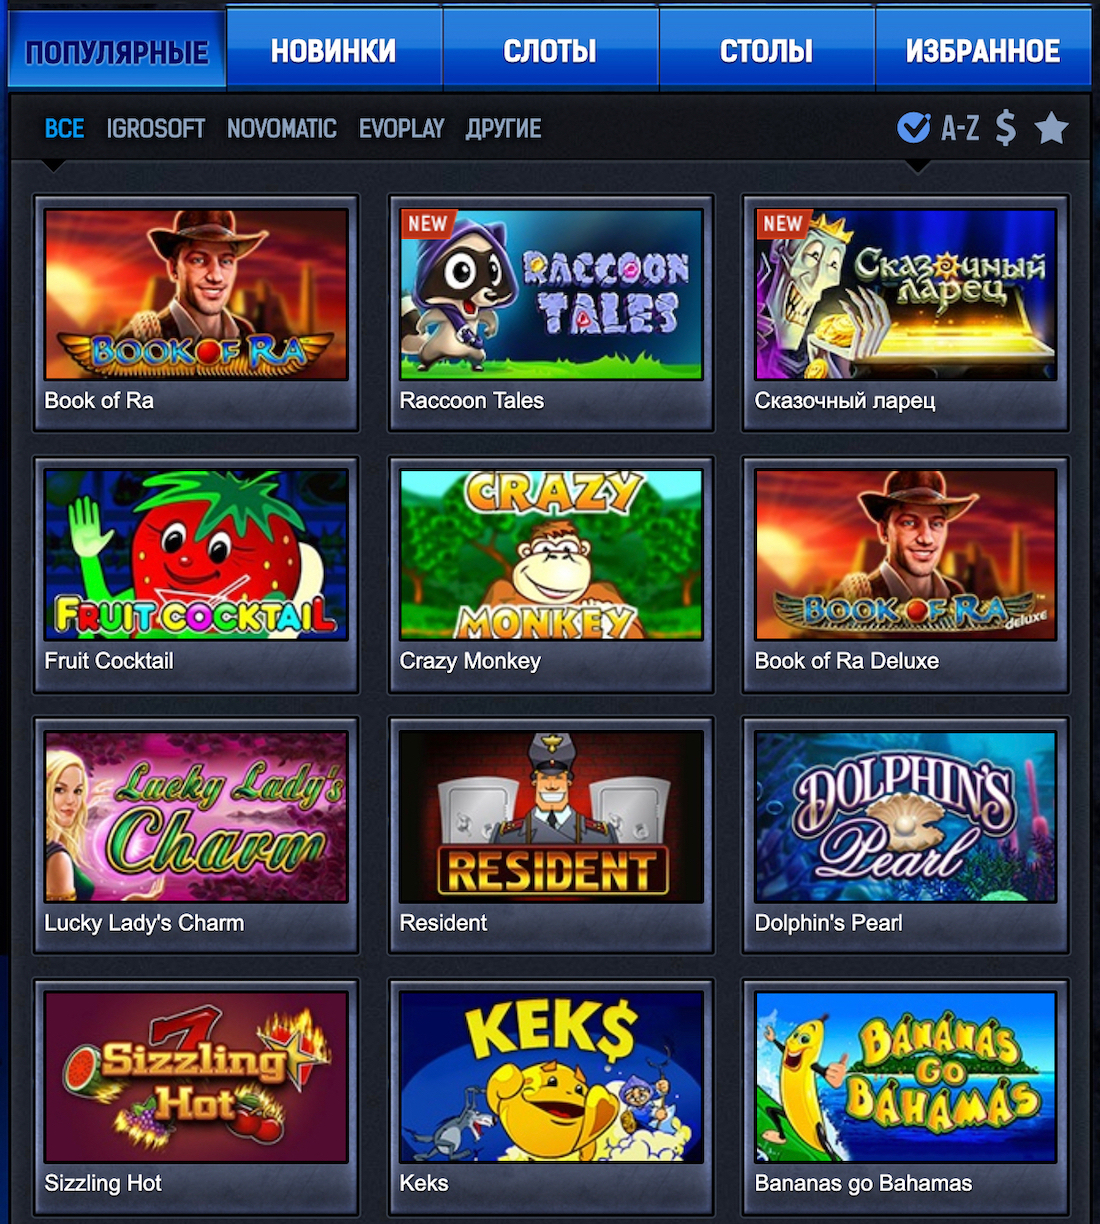 Netent online casino games